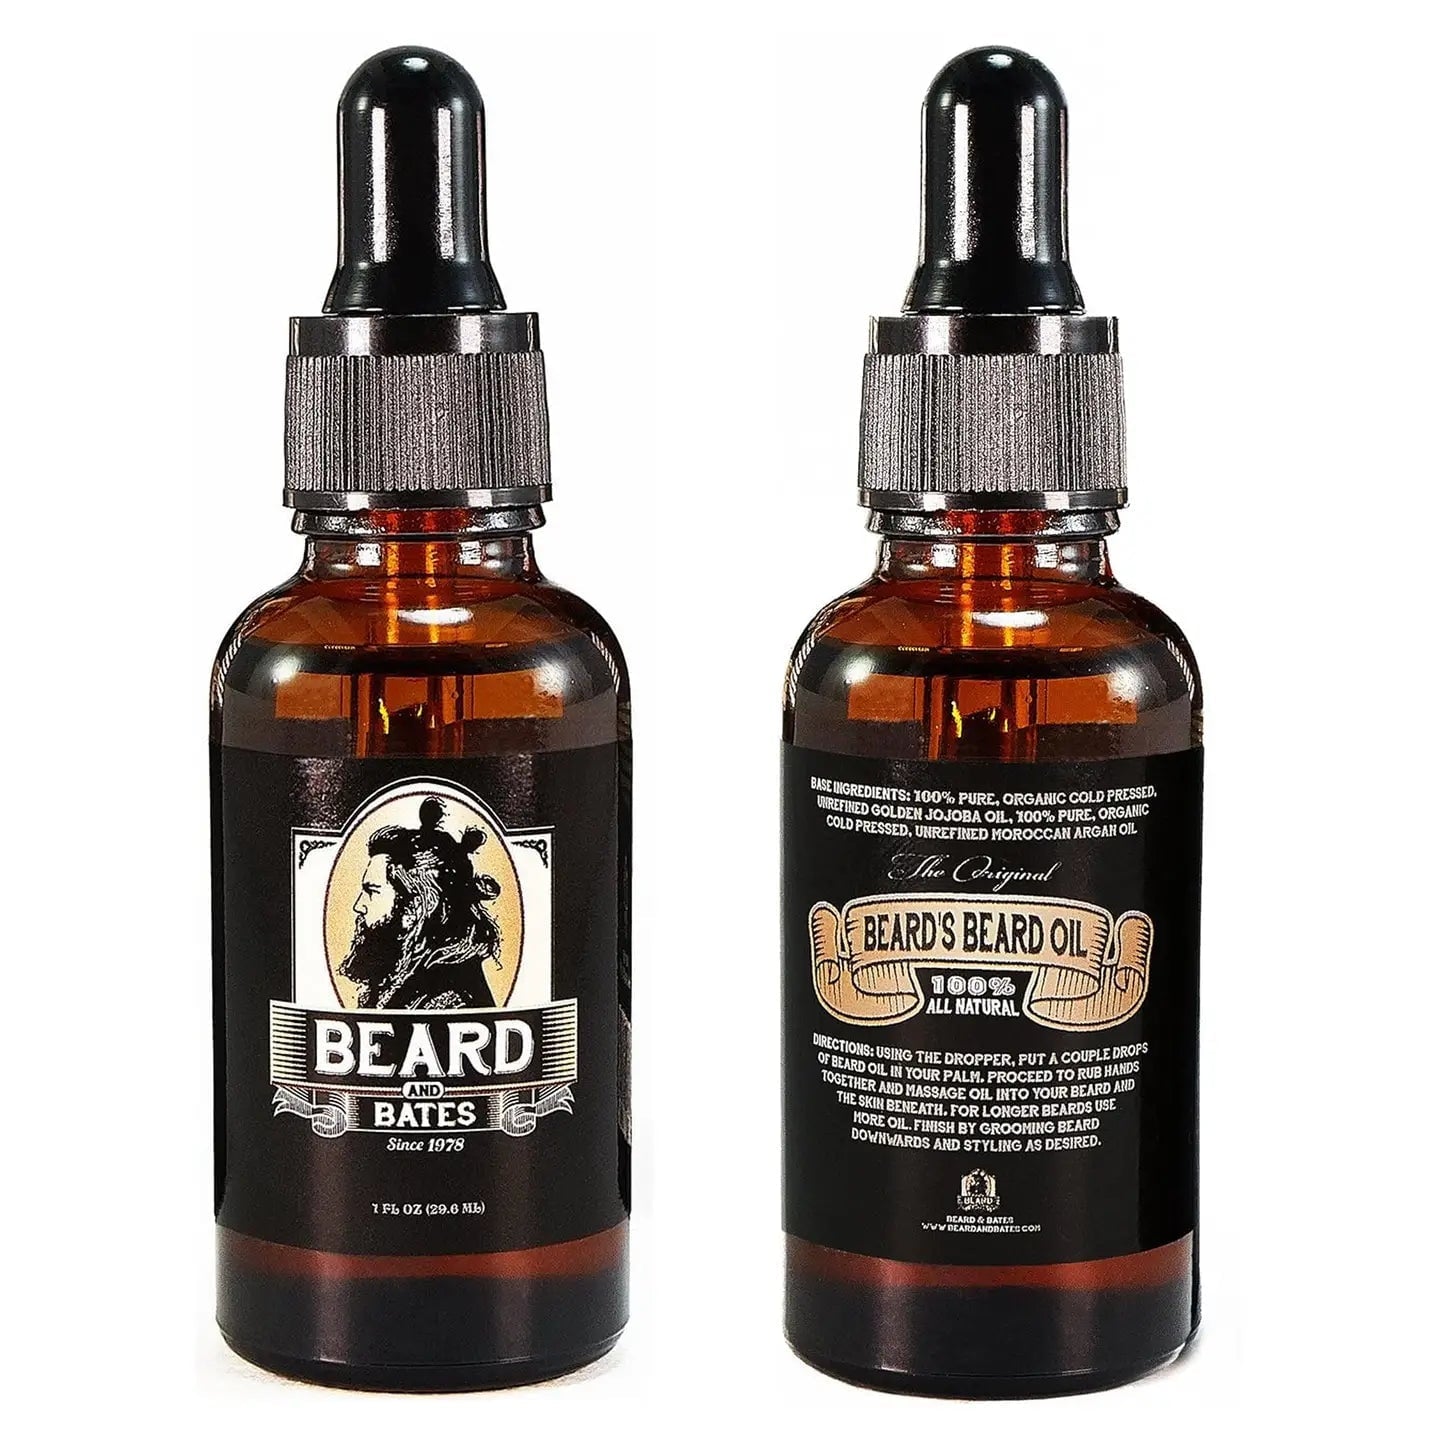 The Original Beard's Beard Oil - Original Formula